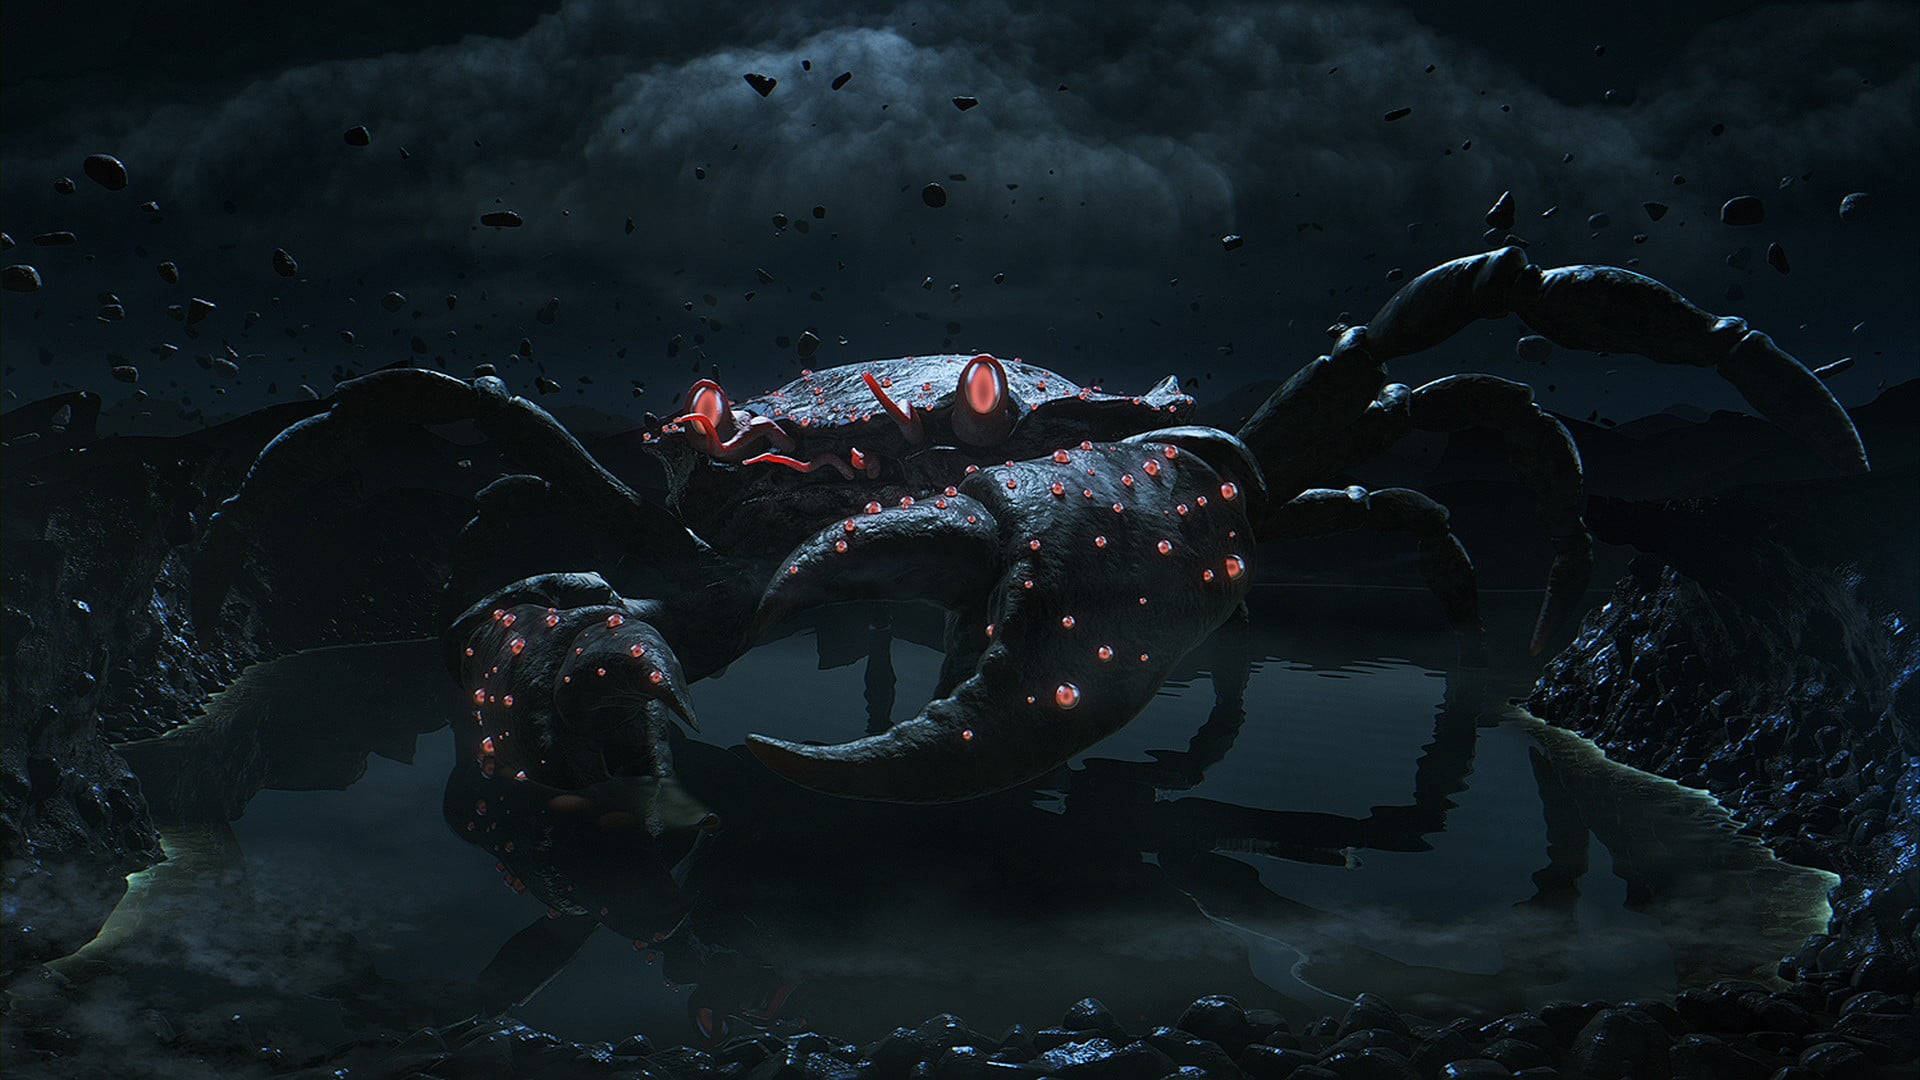 Red-eyed Black Monster Crab Wallpaper